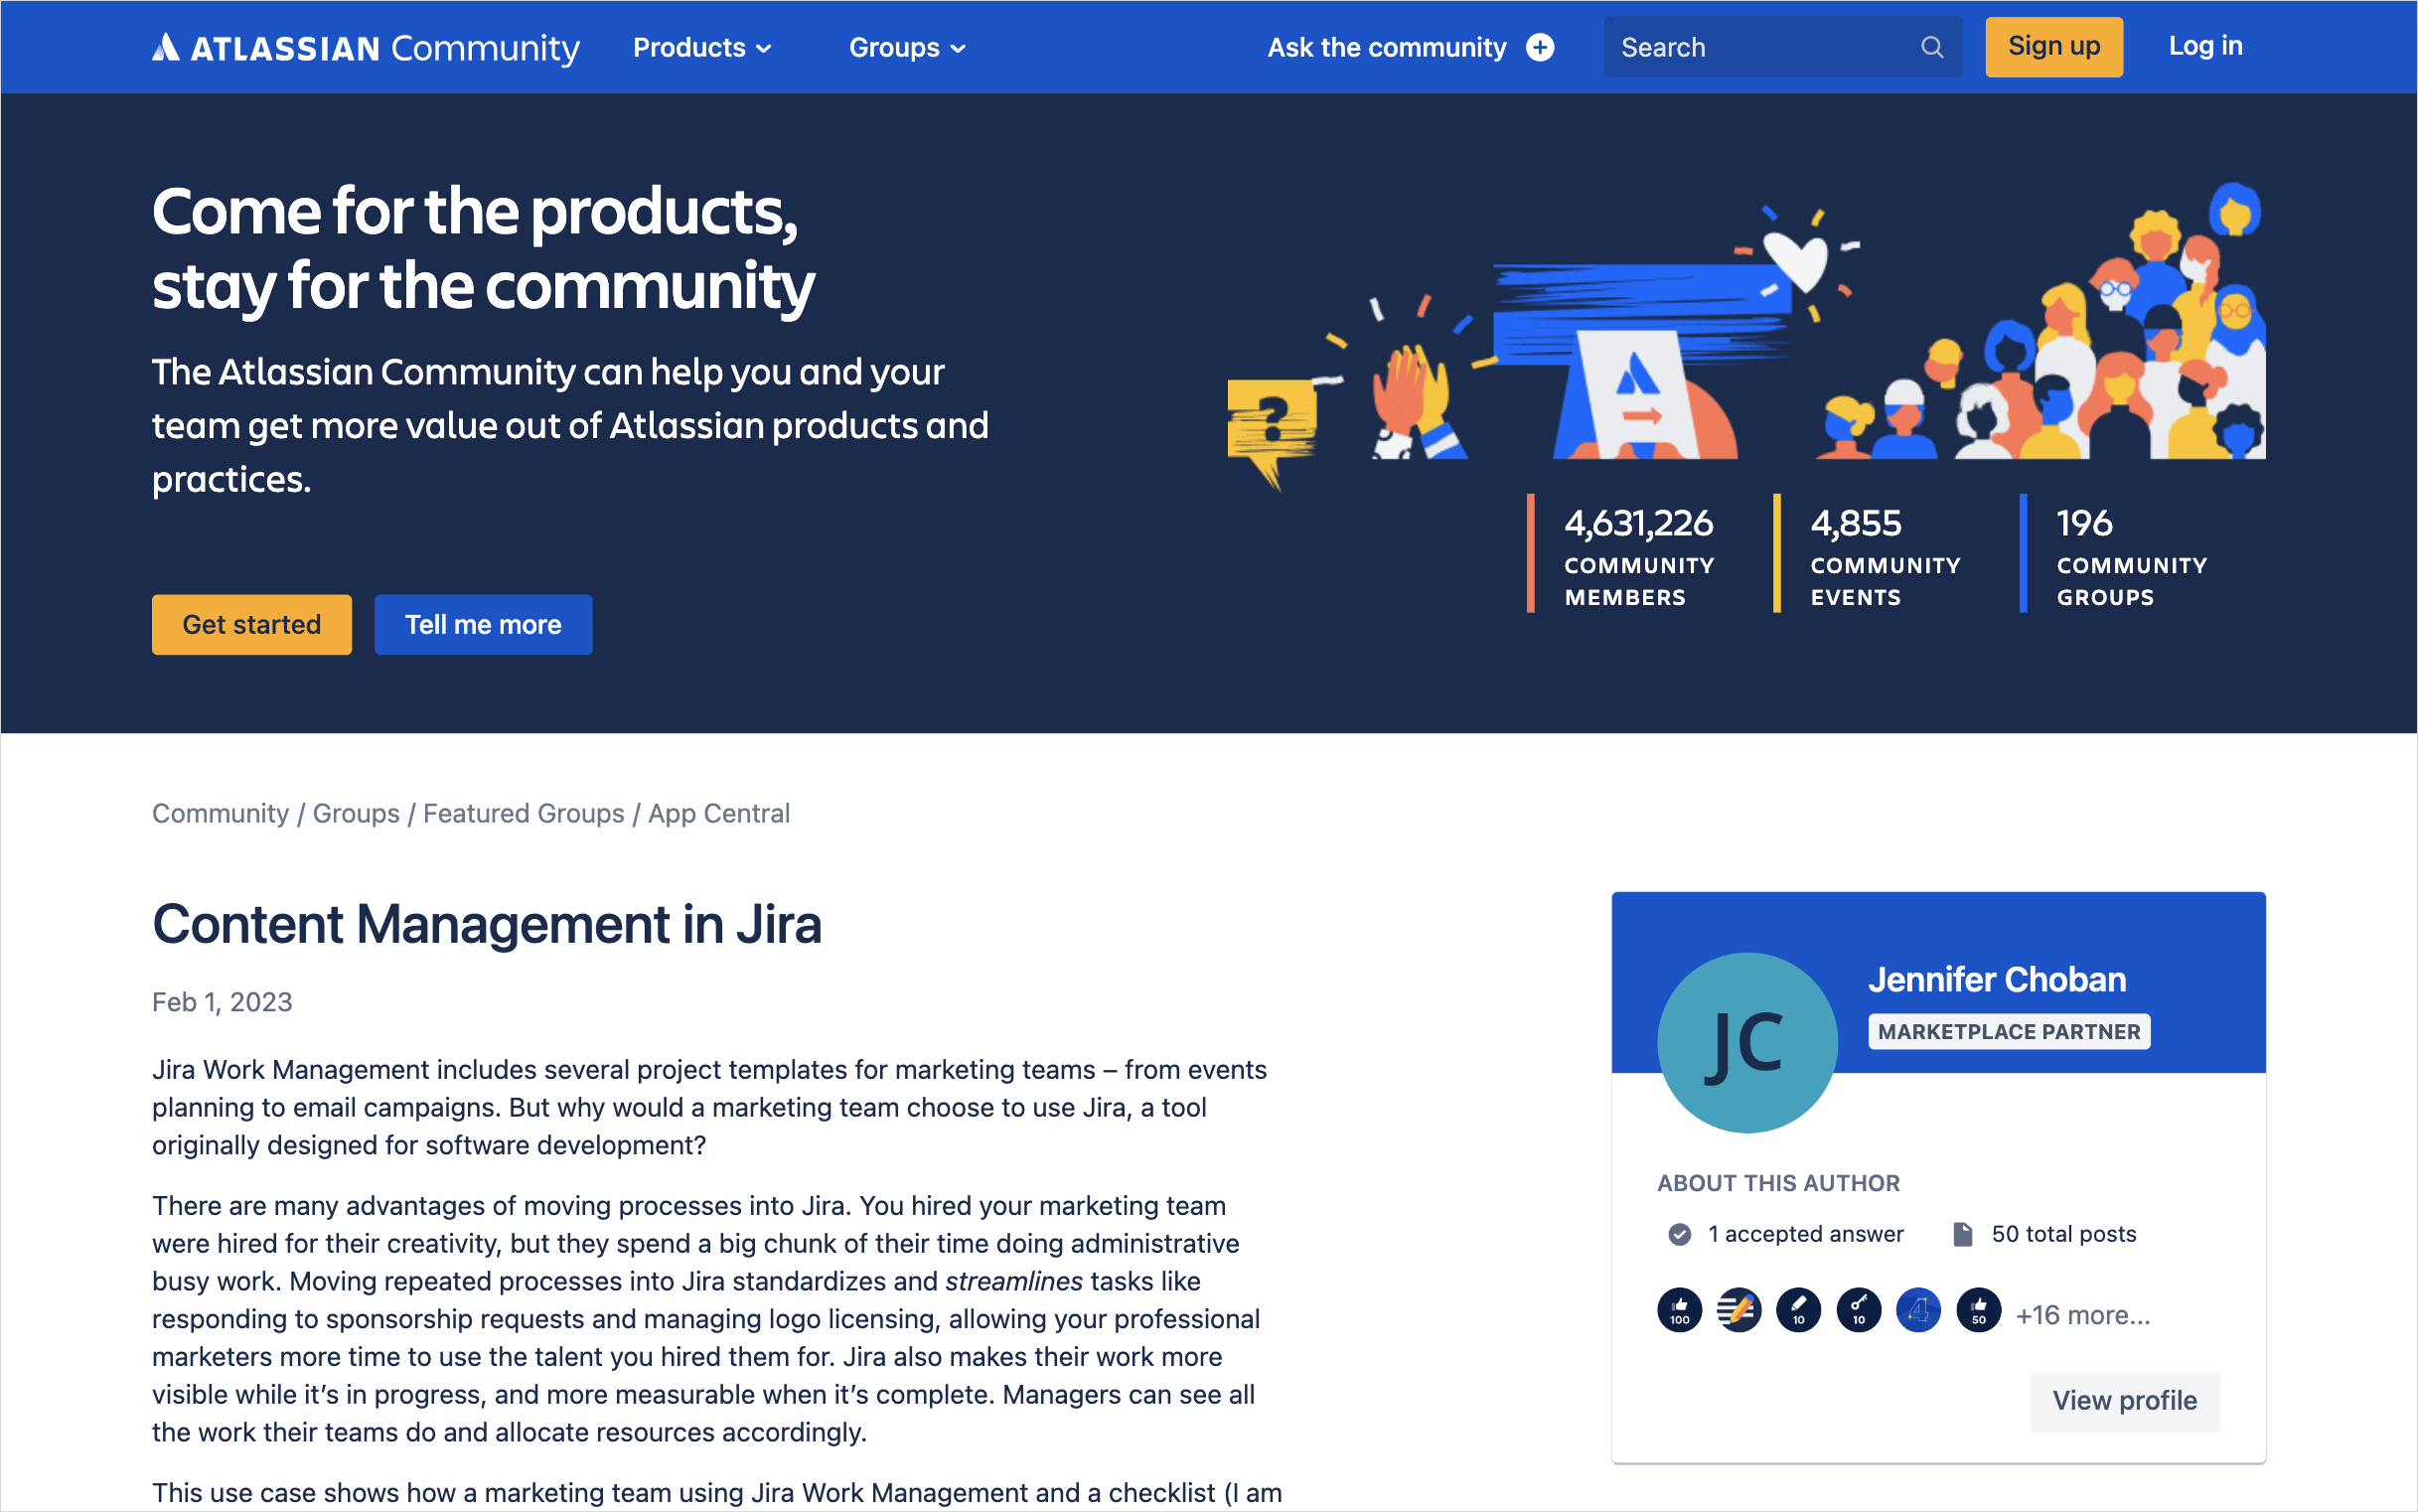 Content Management Using Jira